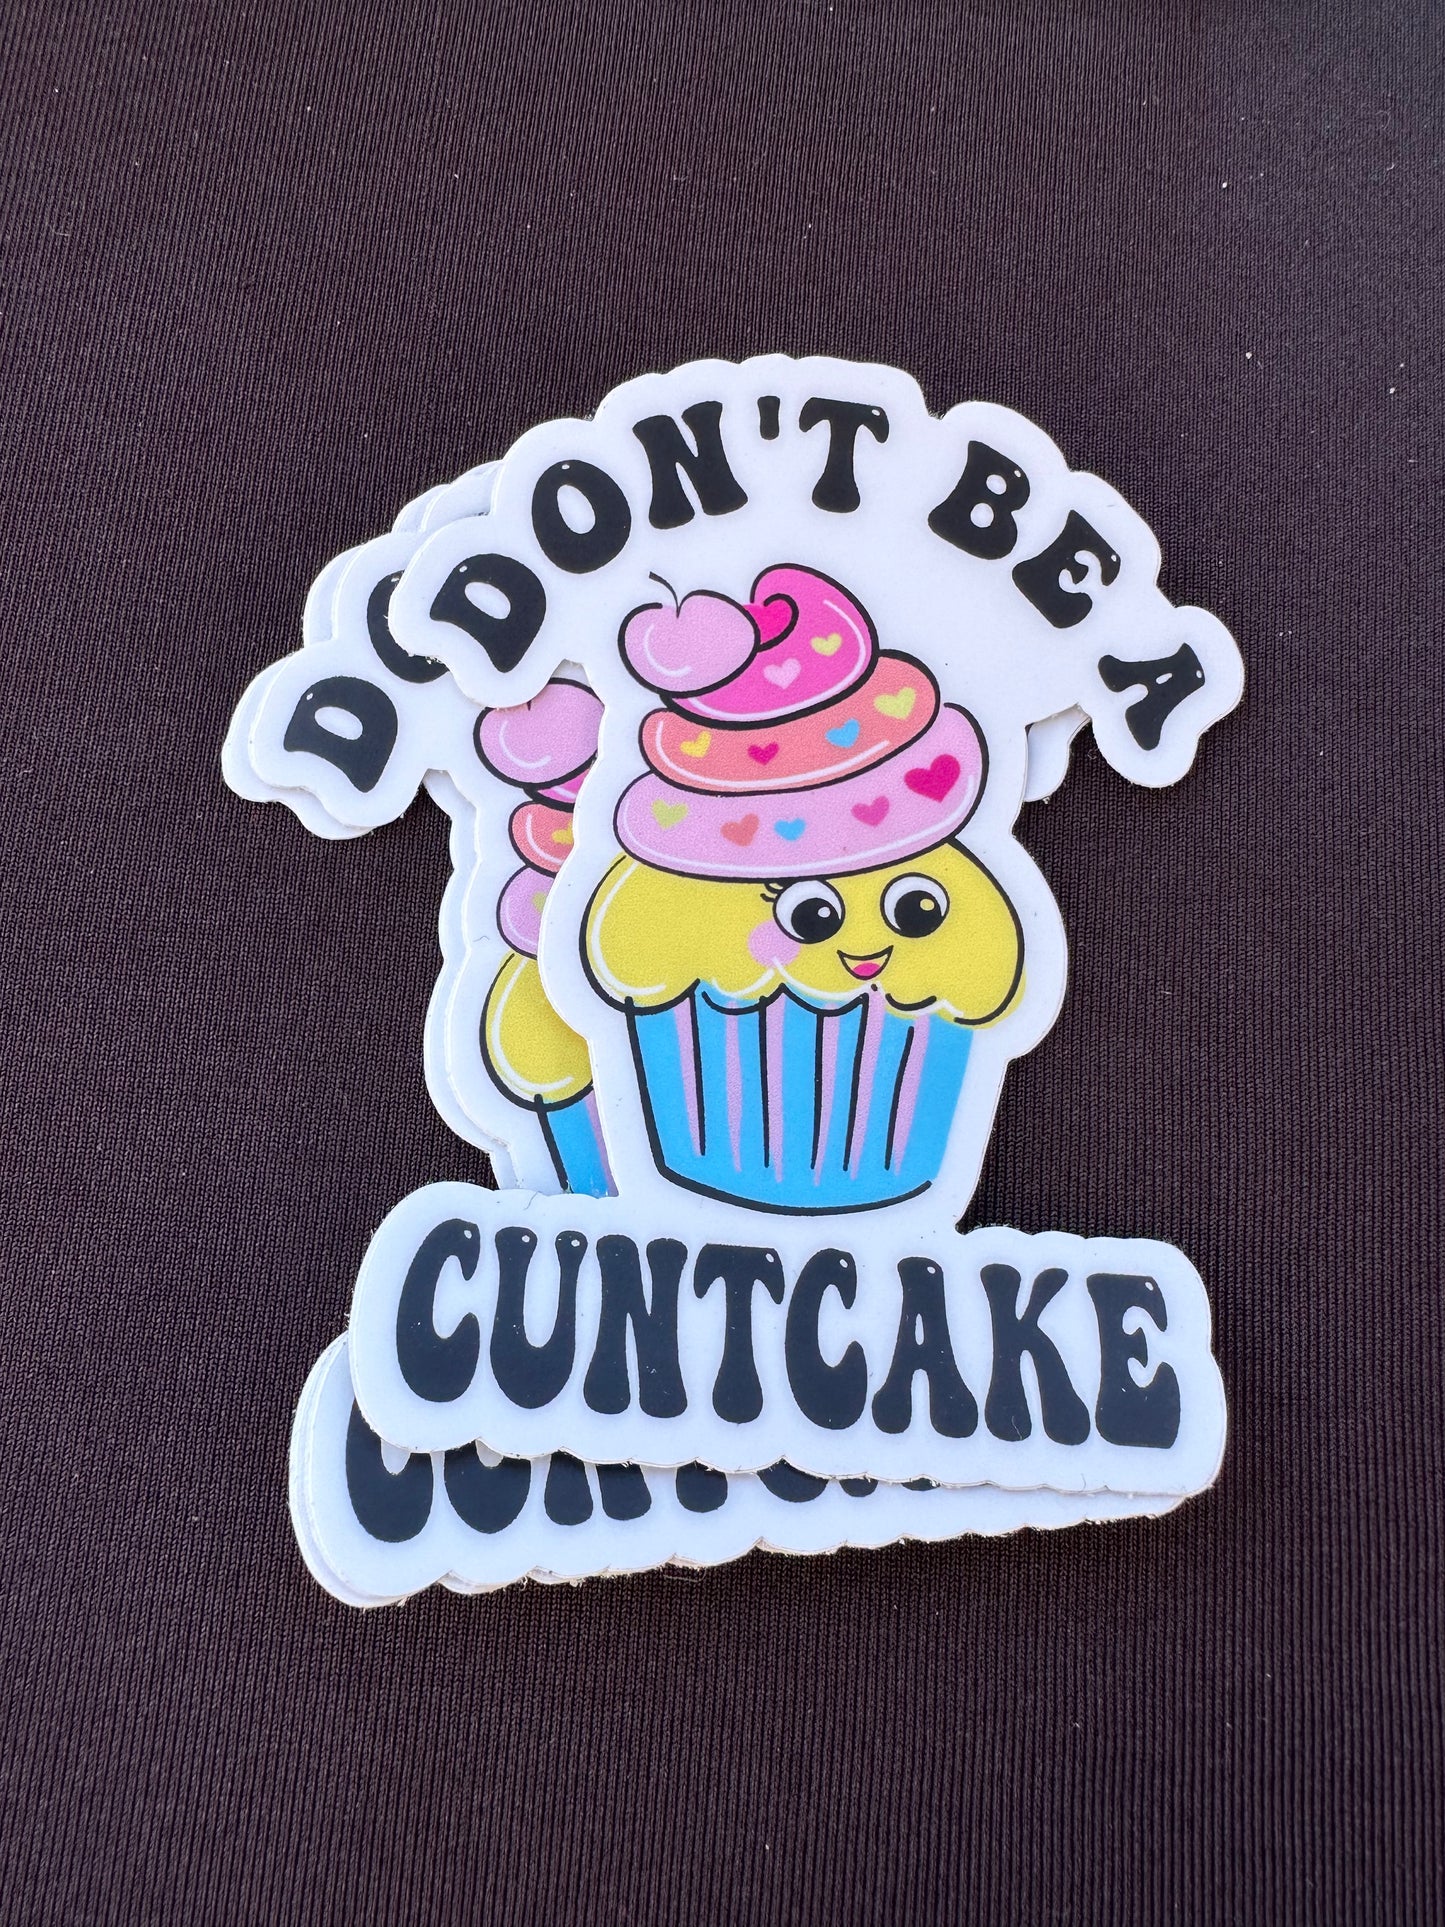 Don’t be a cuntcake